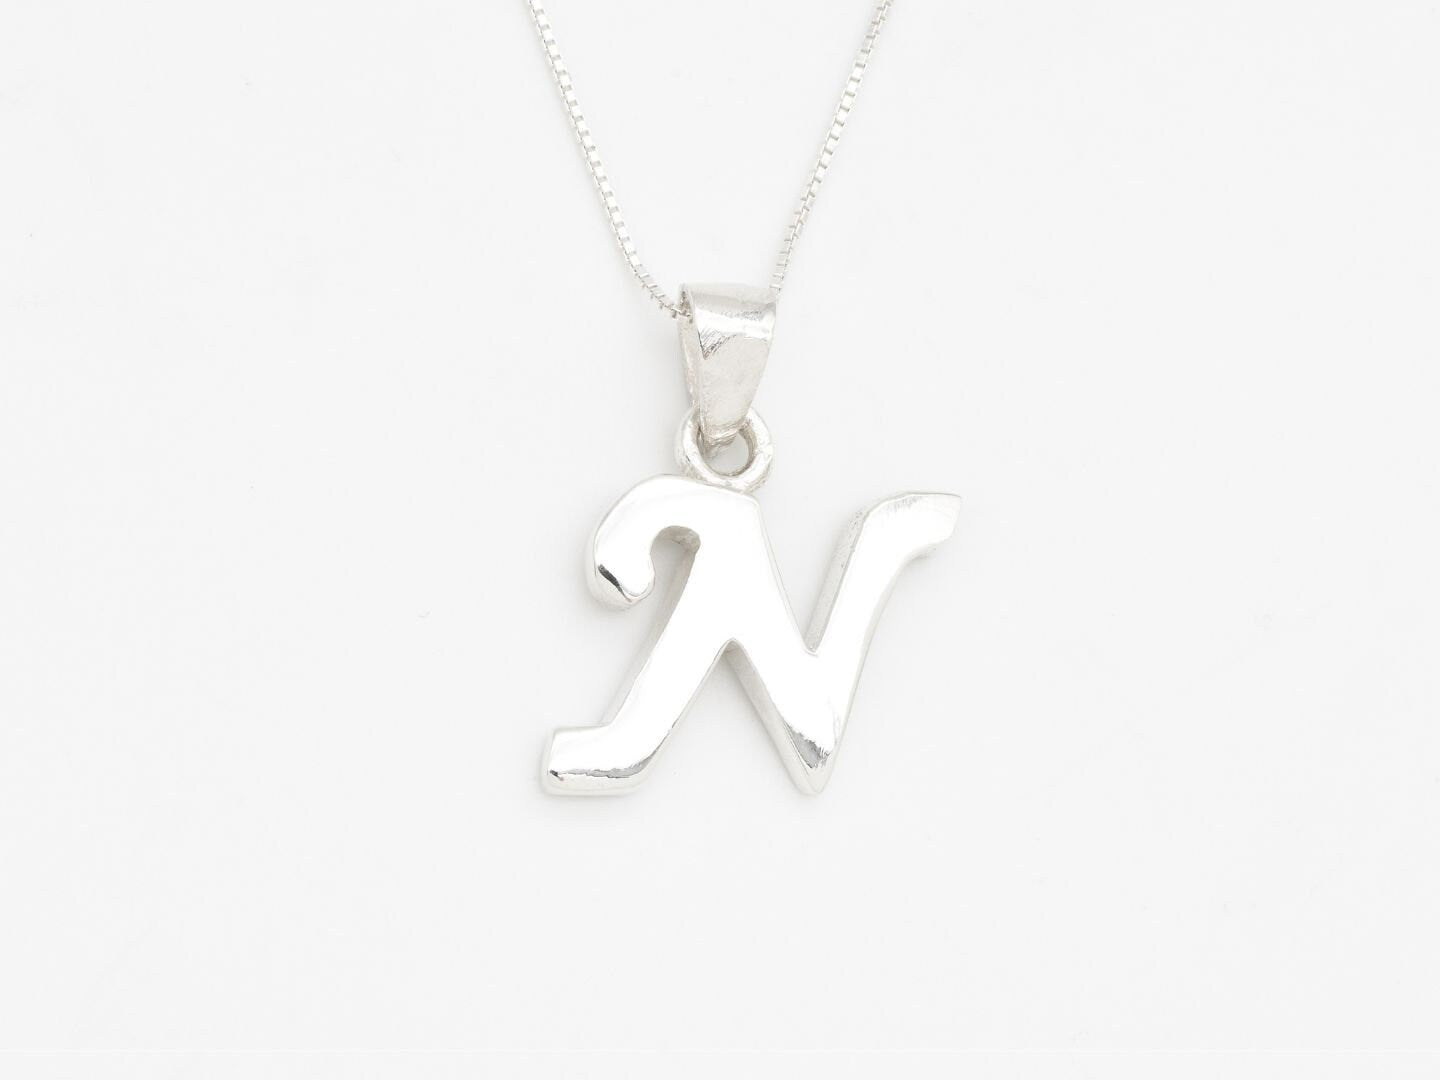 Gold Letter N Pendant - Alphabet Letter Necklace - Initial Letter N Pendant